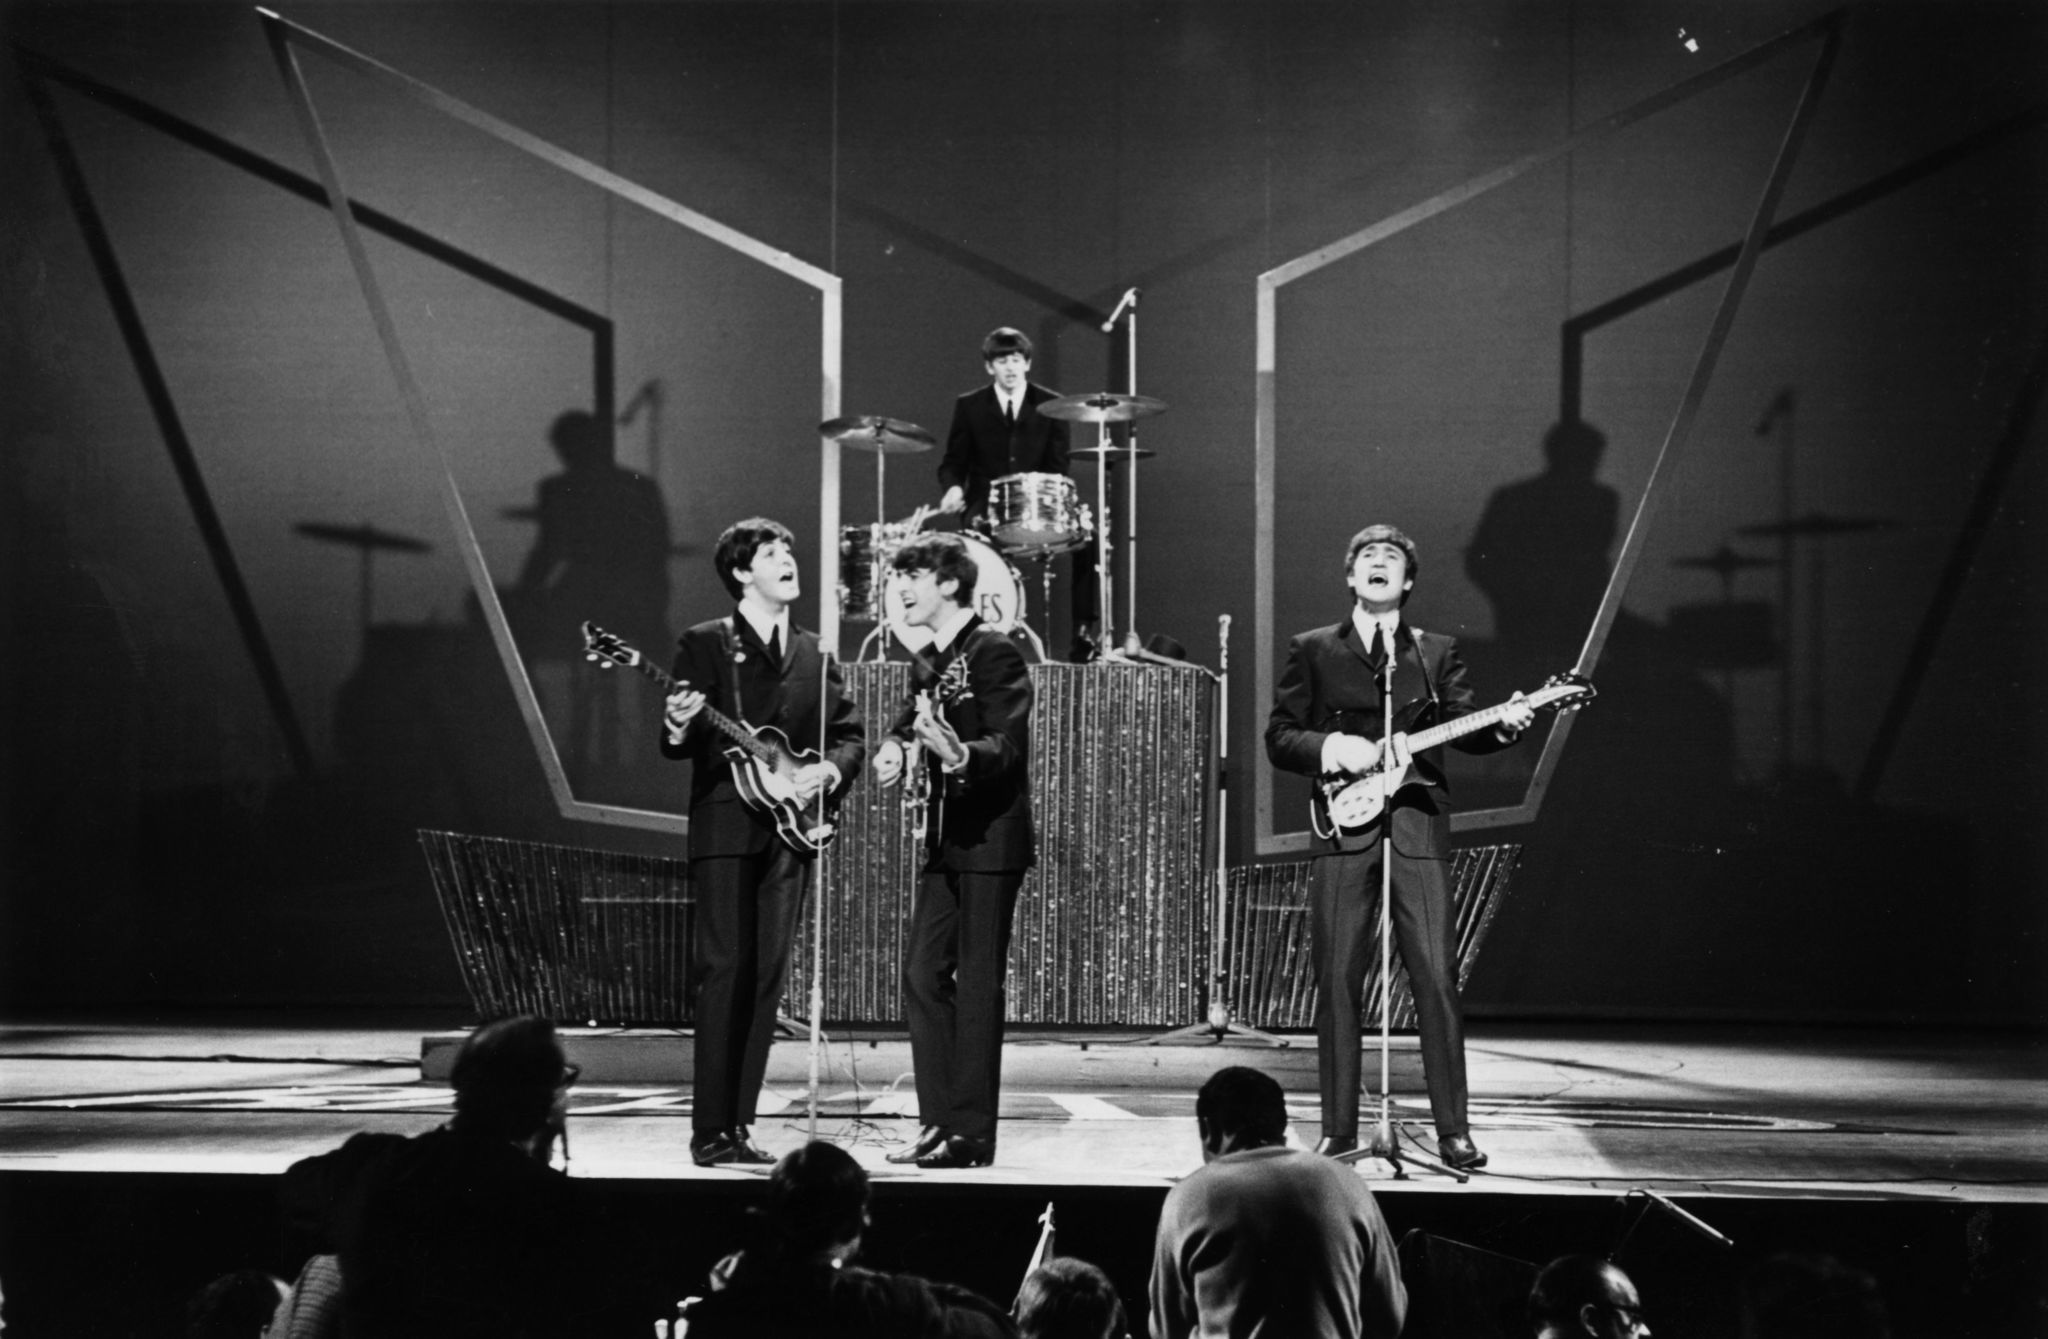 British pop group The Beatles on stage at the London Palladium on Oct. 3, 1963.